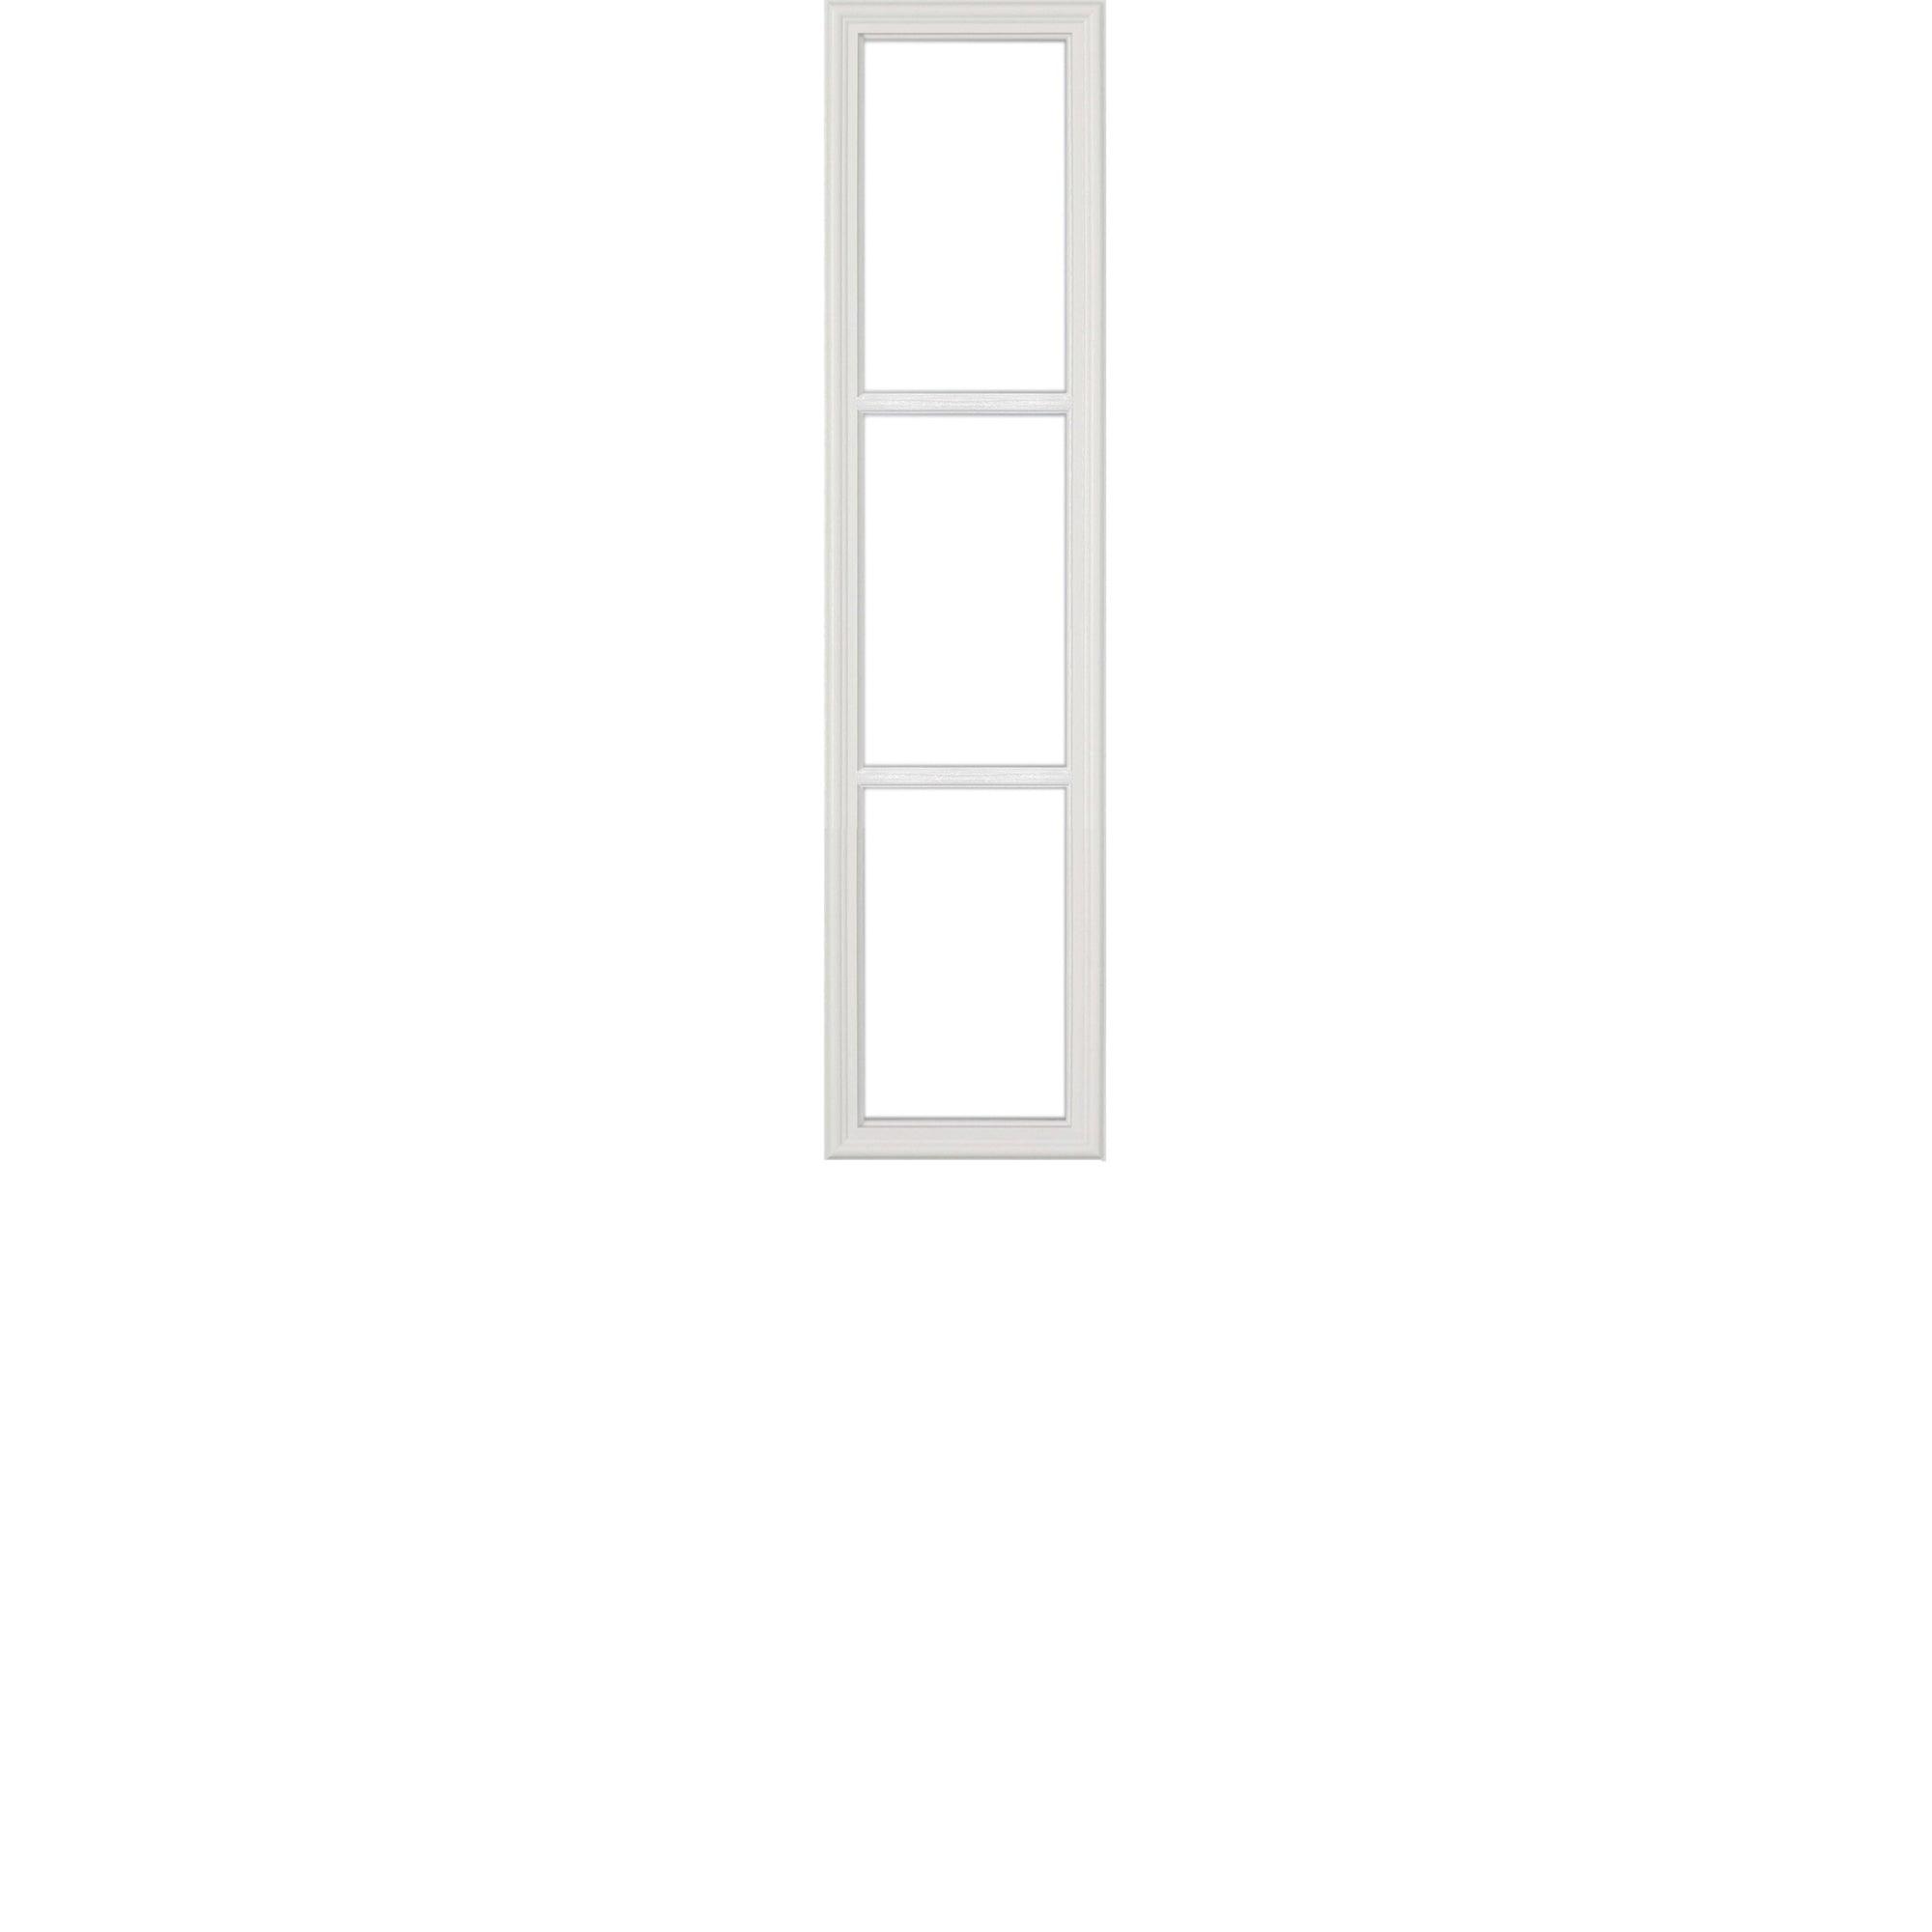 Half Sidelite Frame Kit with 3 Grids - Pease Doors: The Door Store